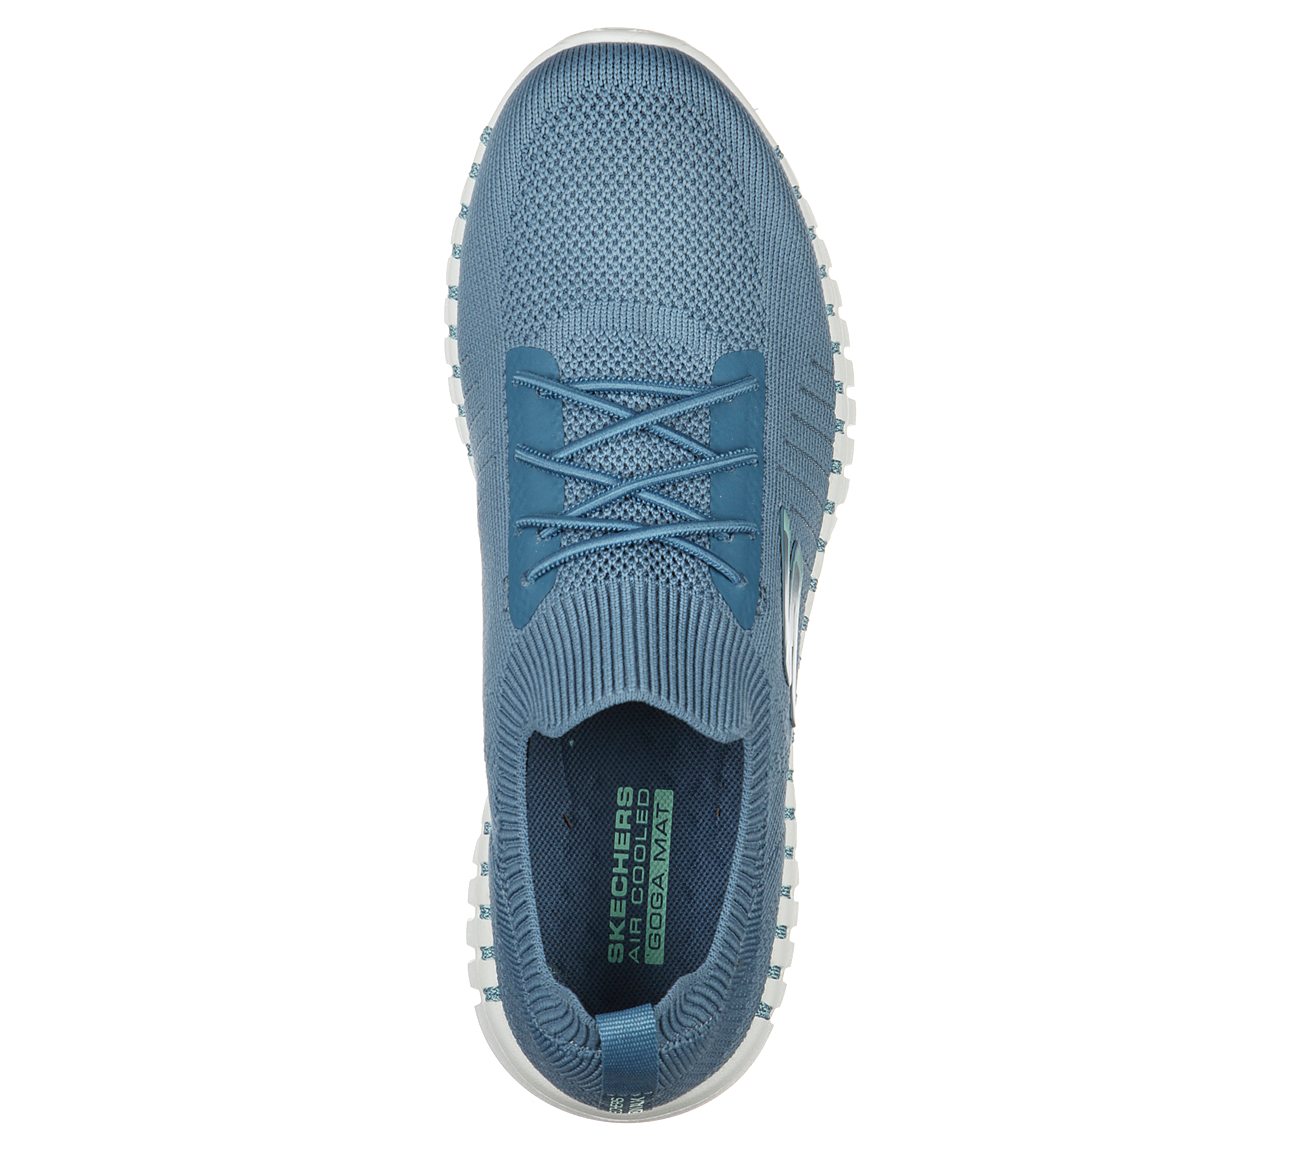 GO WALK SMART - SCHOLAR, BLUE Footwear Top View